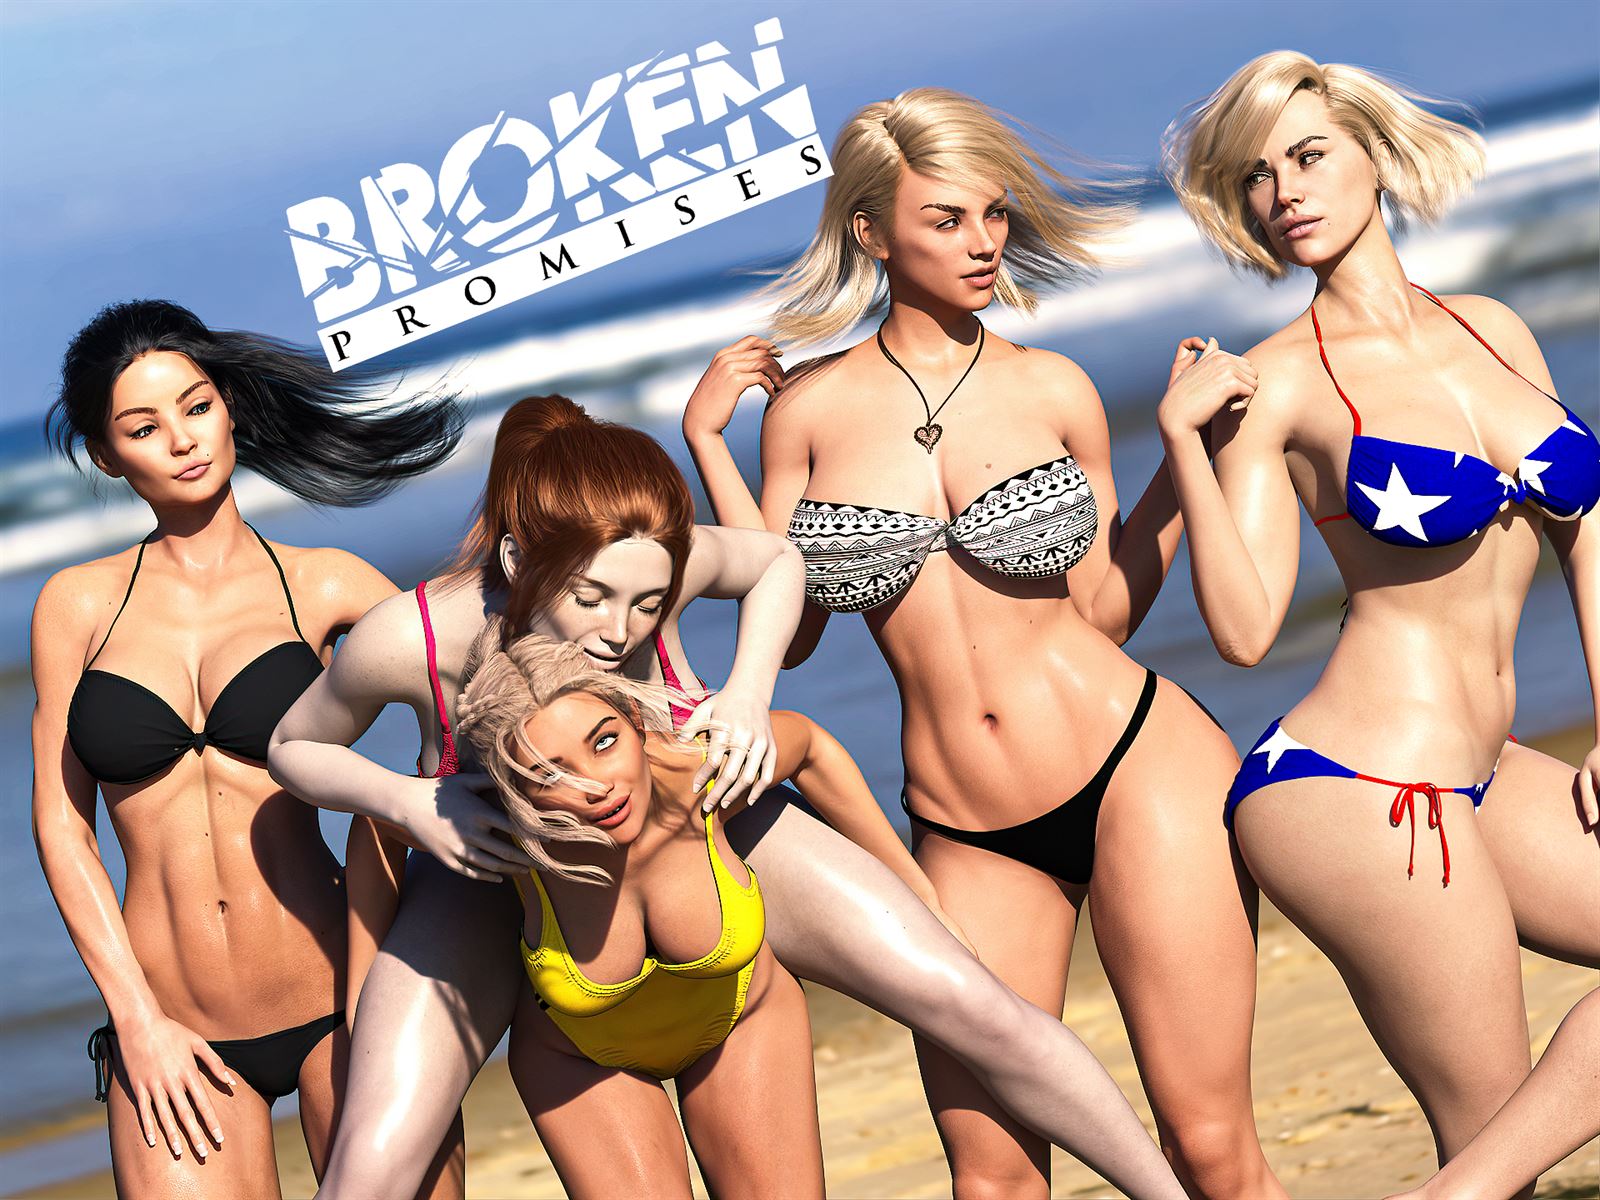 Broken Promises porn xxx game download cover